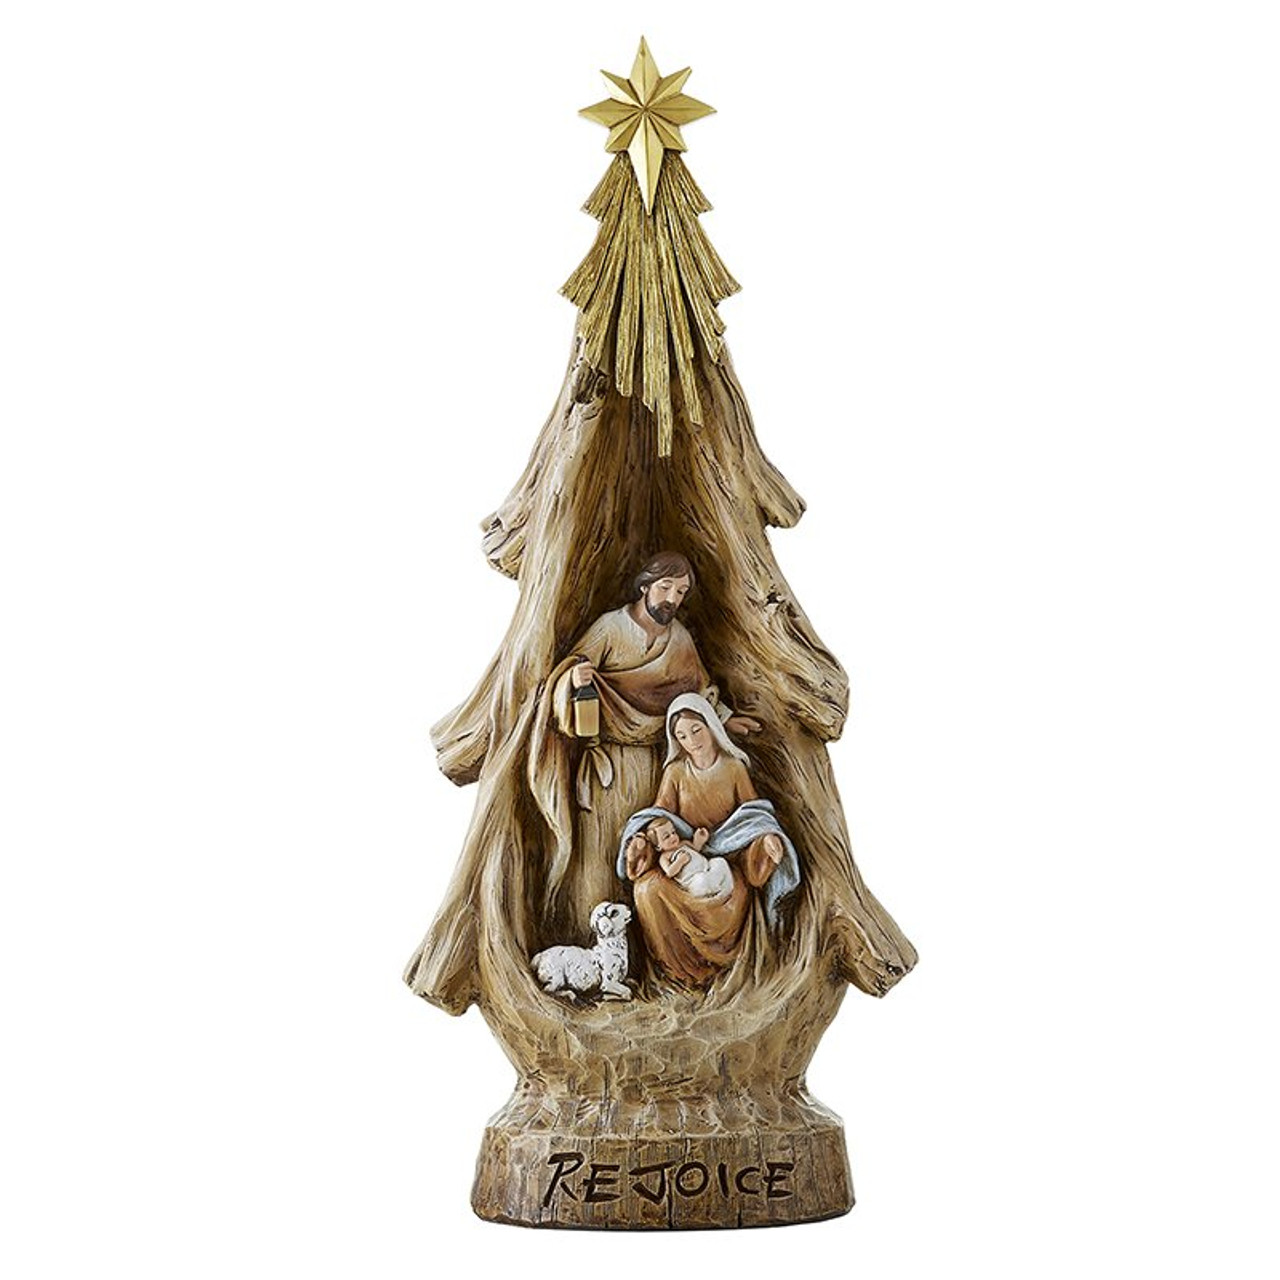 Rejoice Nativity Tree Figurine - [Wholesale]Christian Brands Catholic